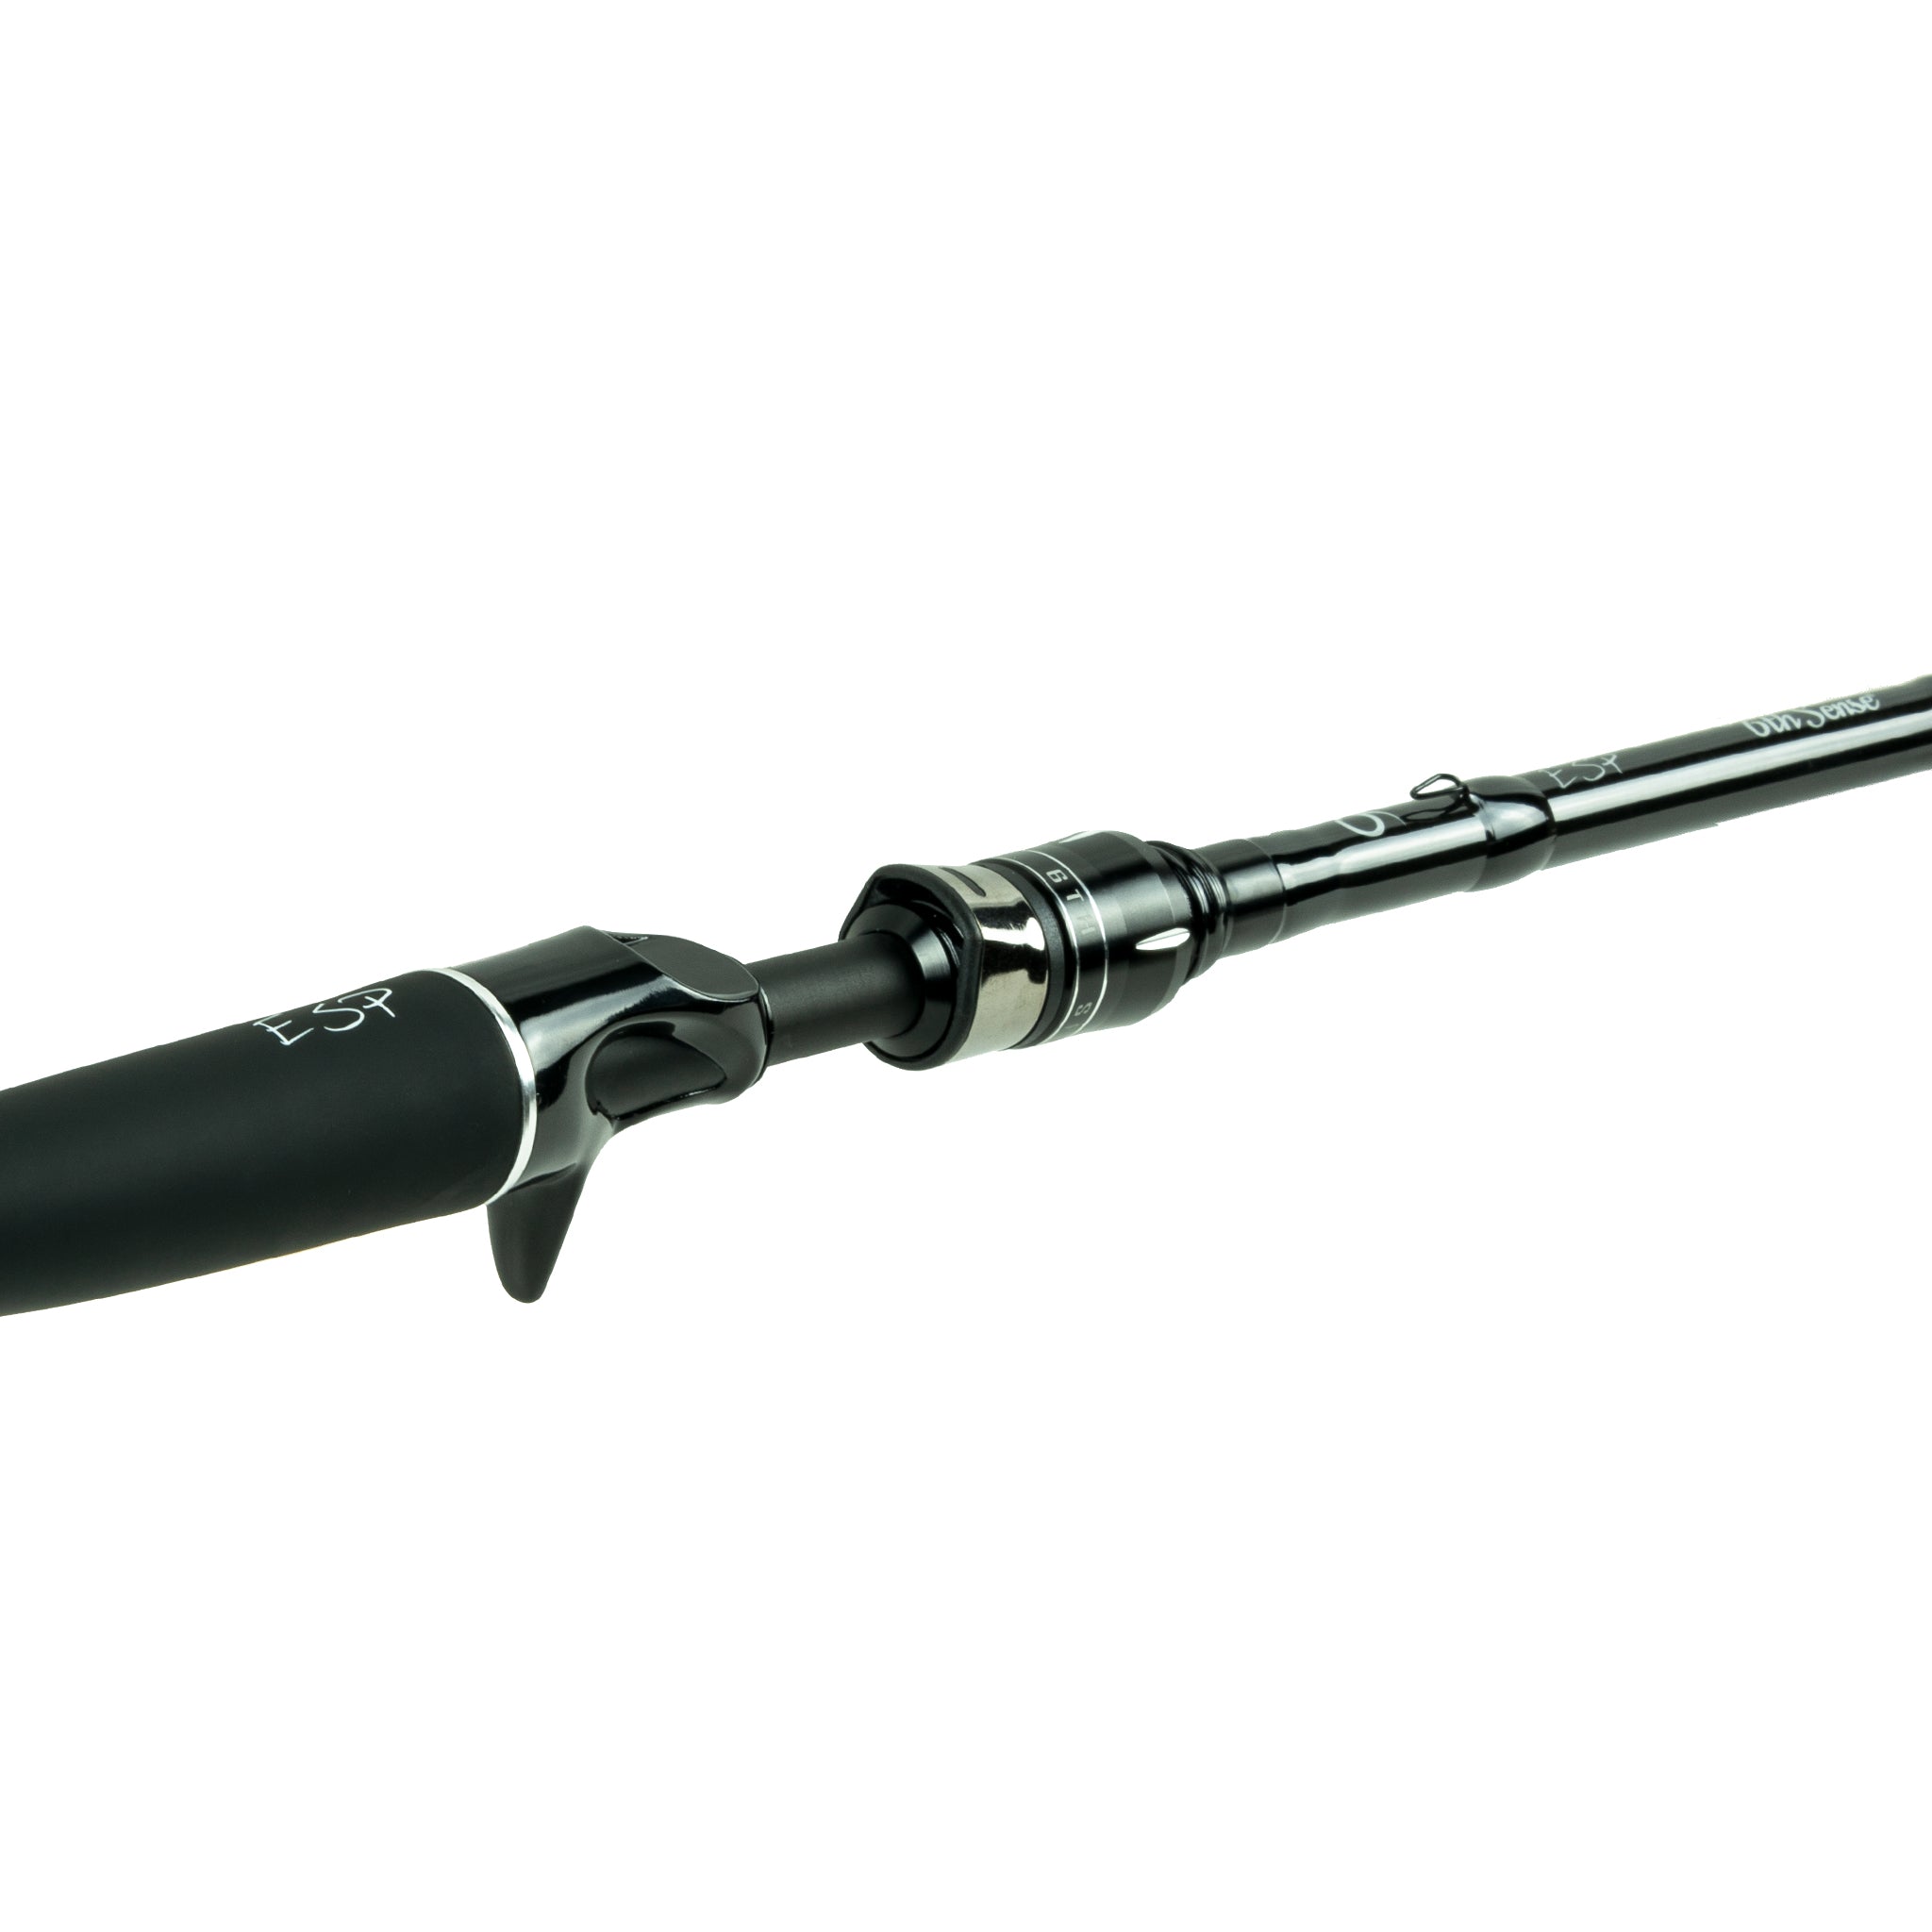 6th Sense Fishing - ESP Series Casting Rod - 7'5 Medium-Heavy, Fast